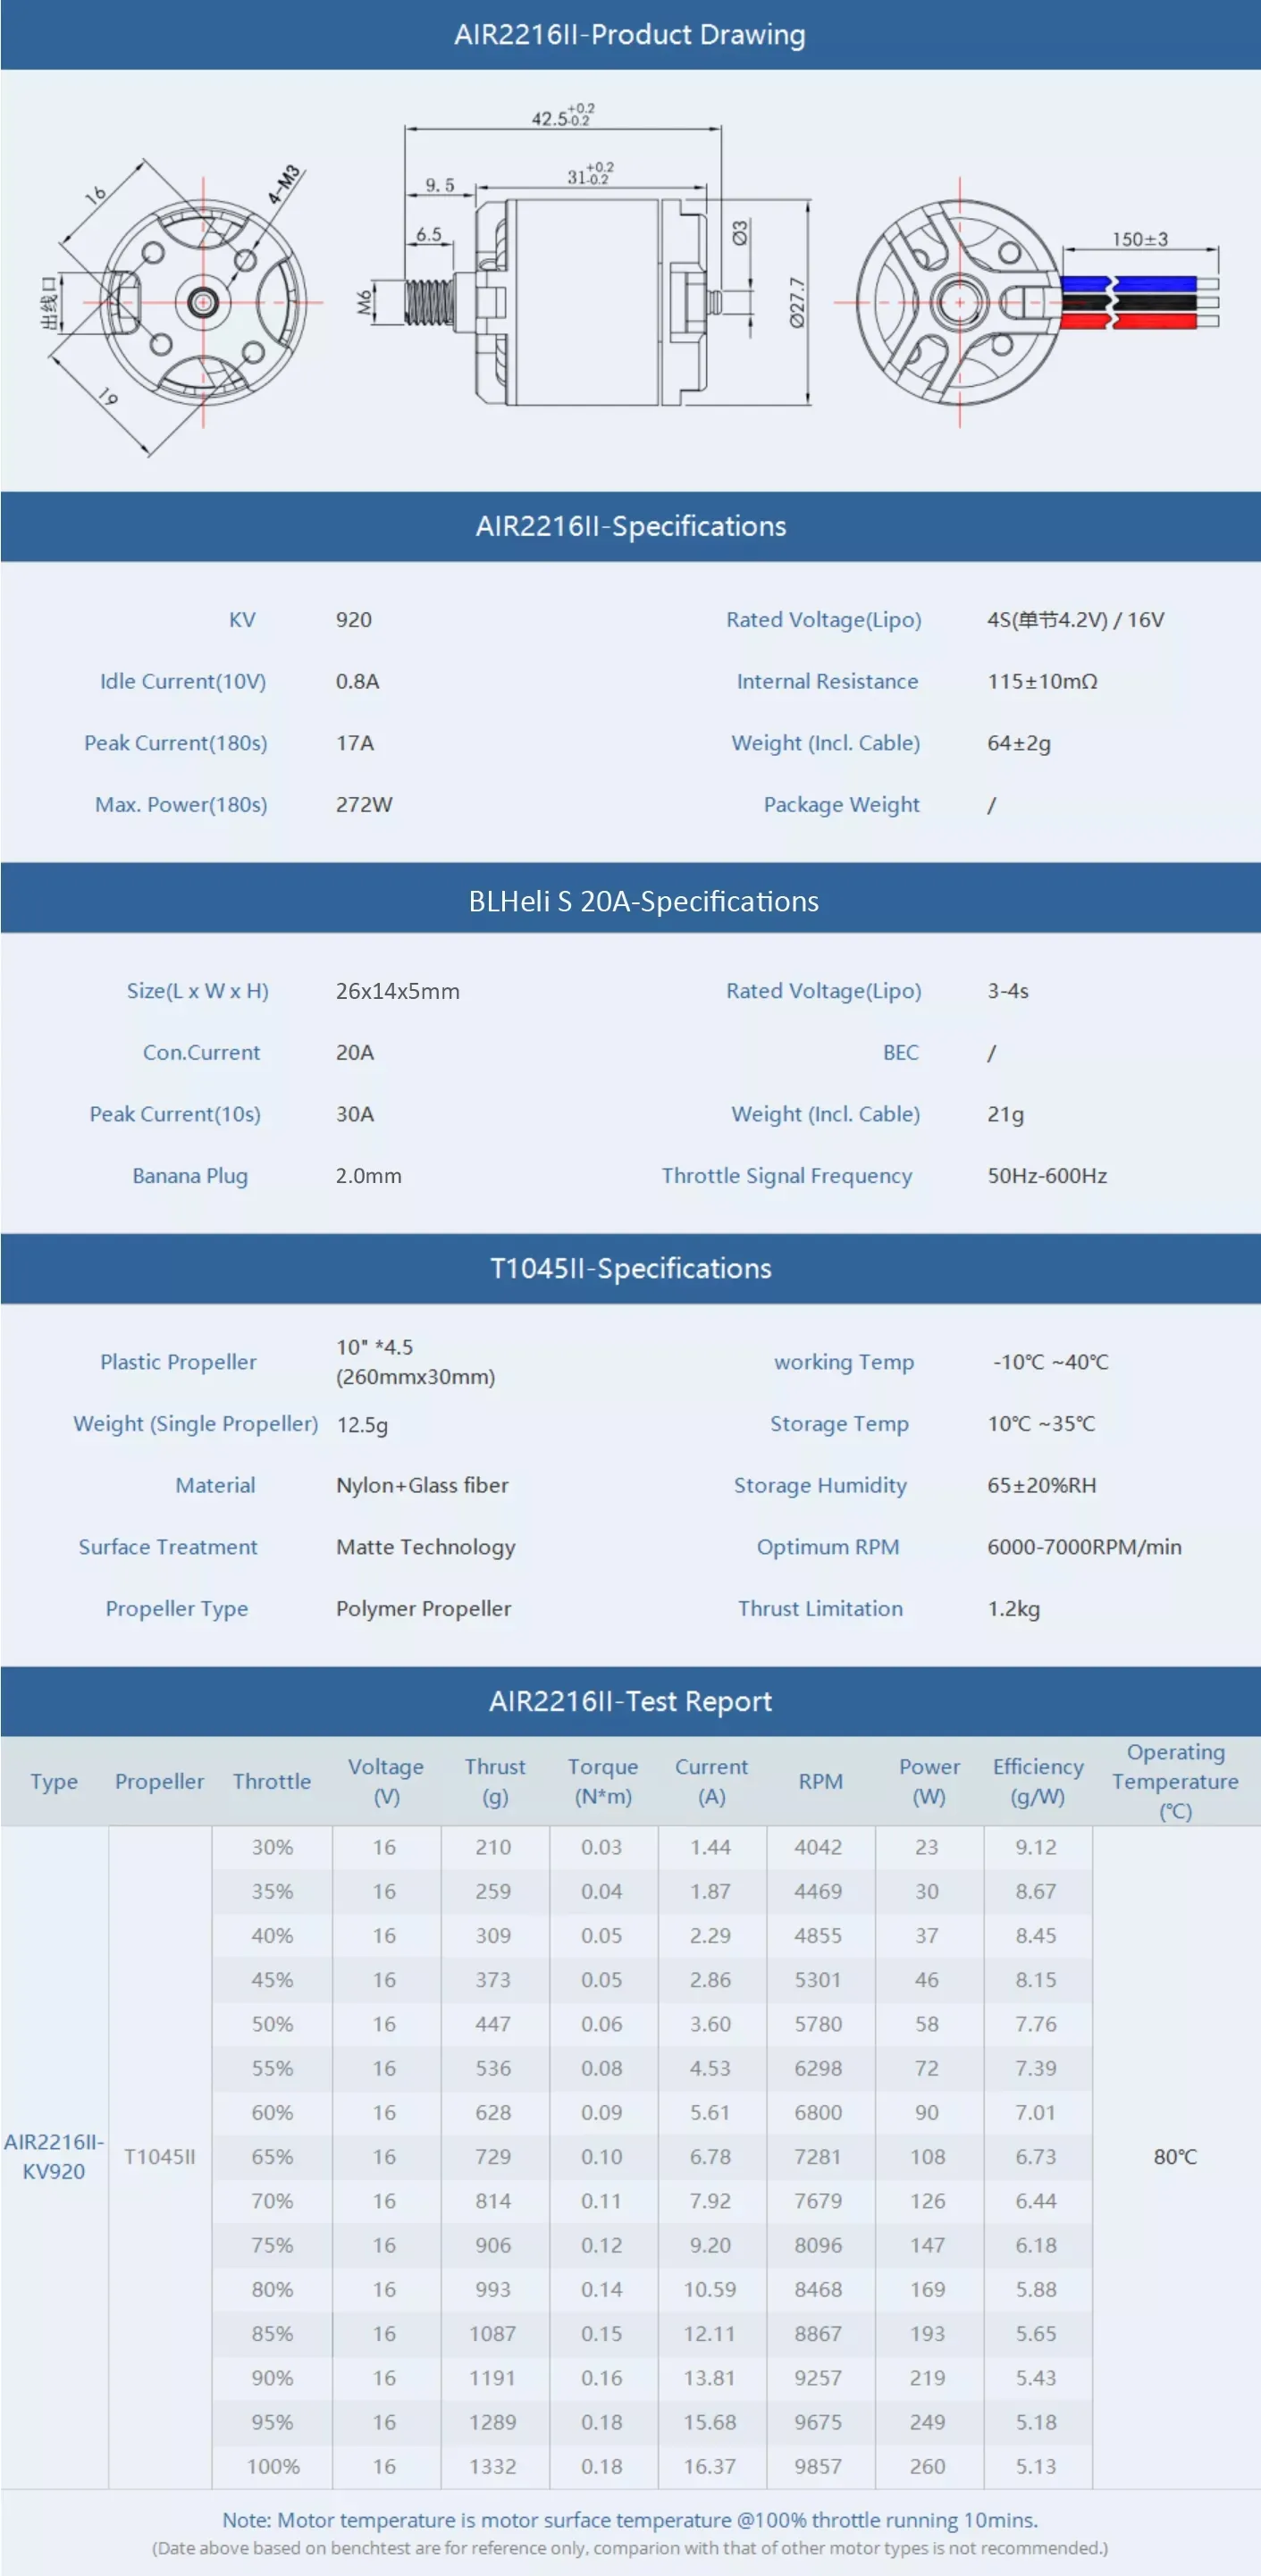 Holybro S500 V2 Development Kit, AIRZZ16II-Test Report Voltage Thrust Torque Current Power